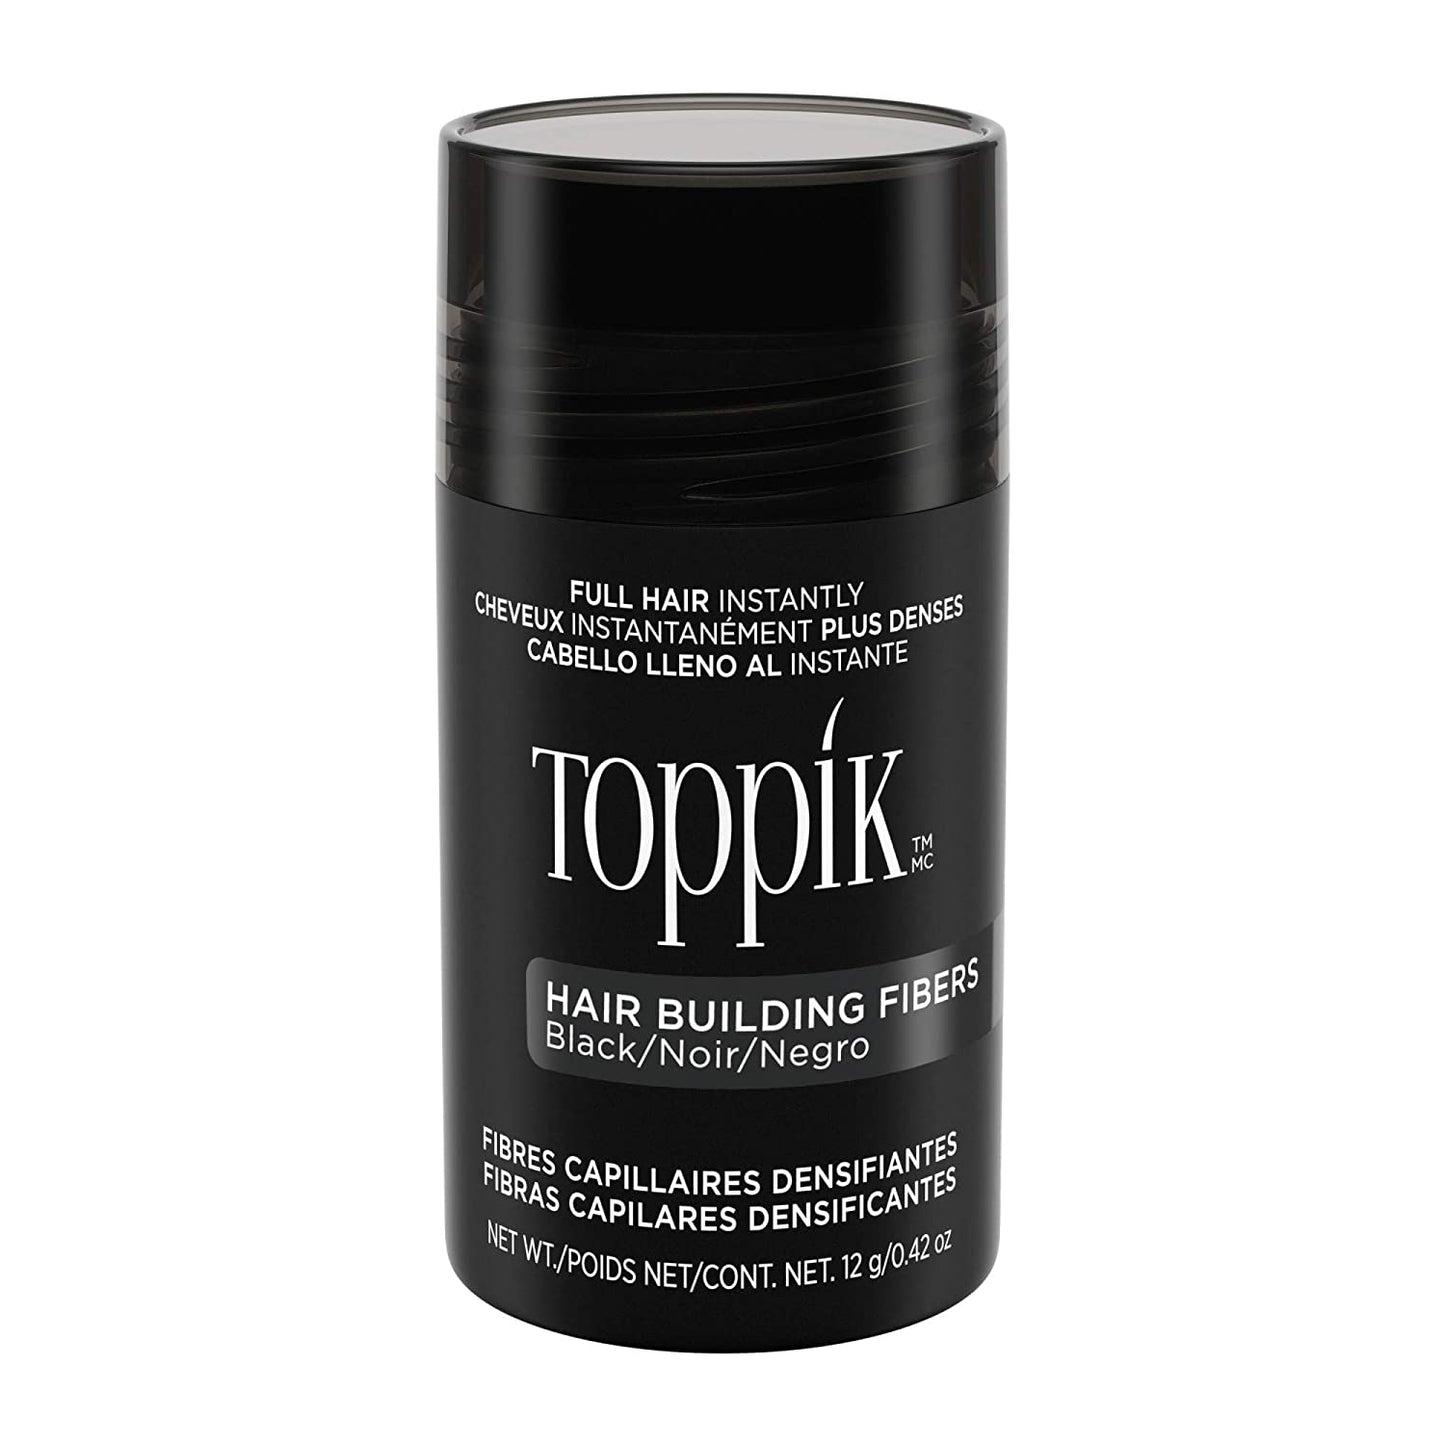 Toppik Hair Building Fibers - Tam's Beauty Supply 